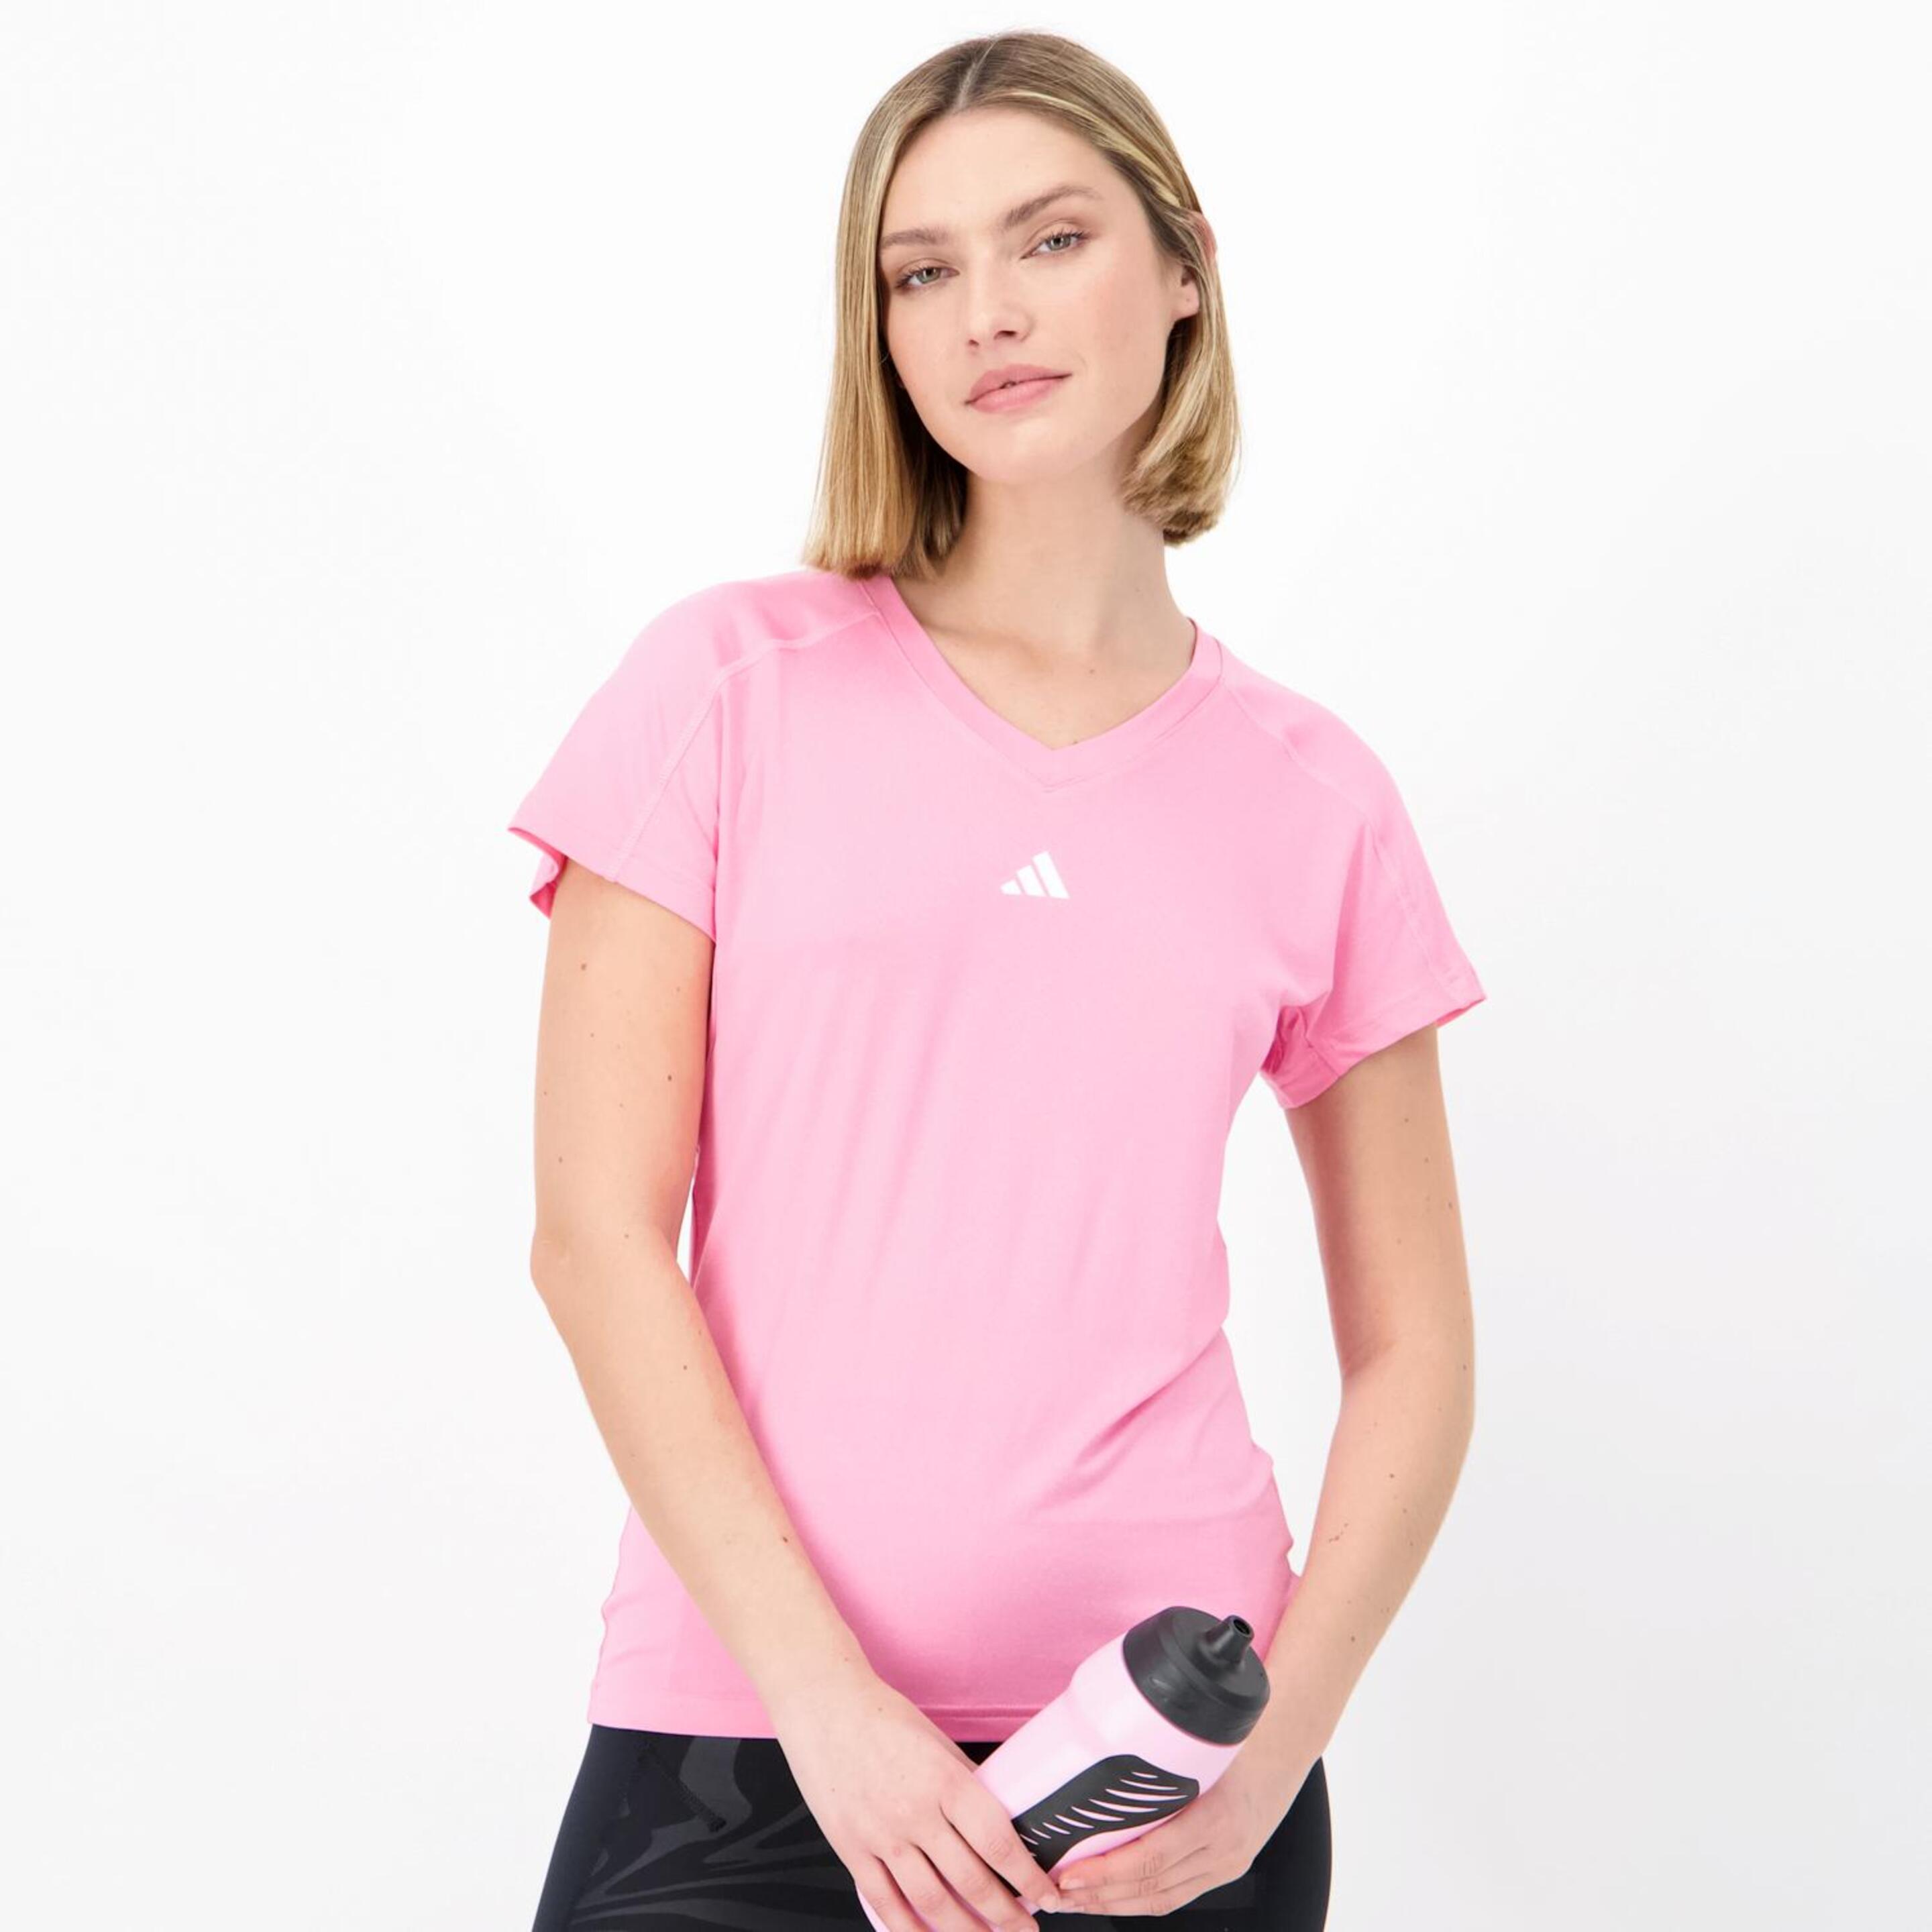 Camiseta adidas - rosa - Camiseta Fitness Mujer